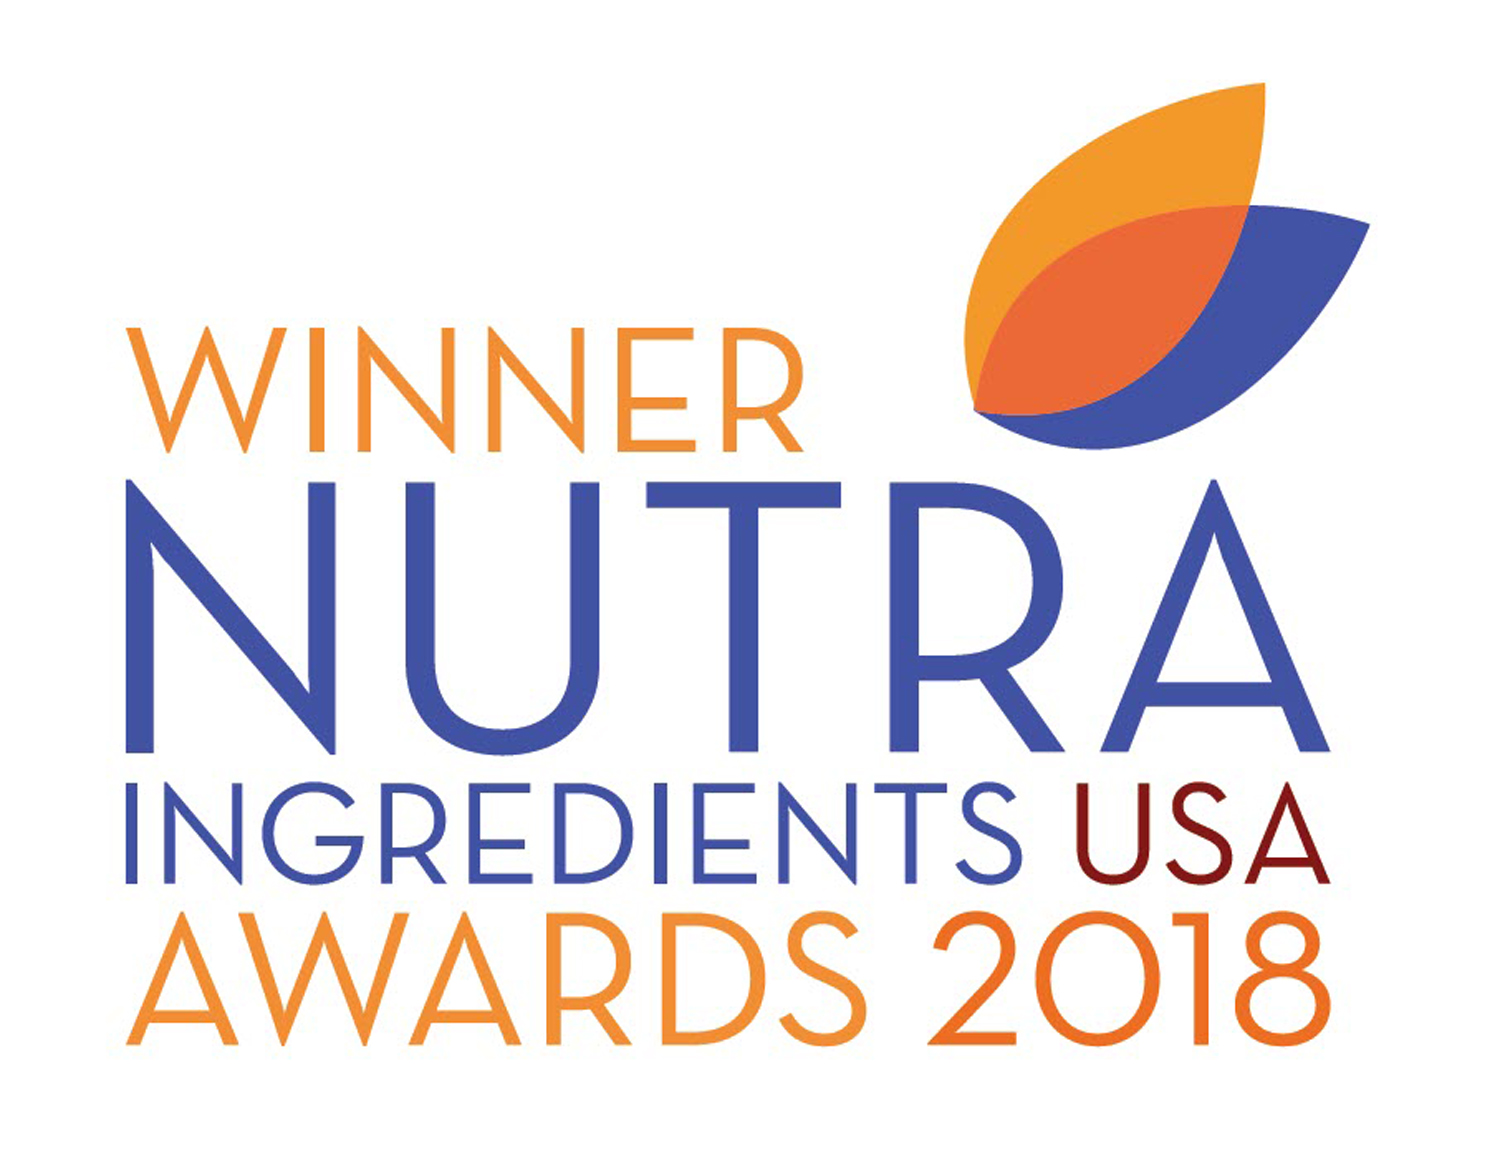 NutraIngredients-USA “Ingredient of the Year Award 2018” logo